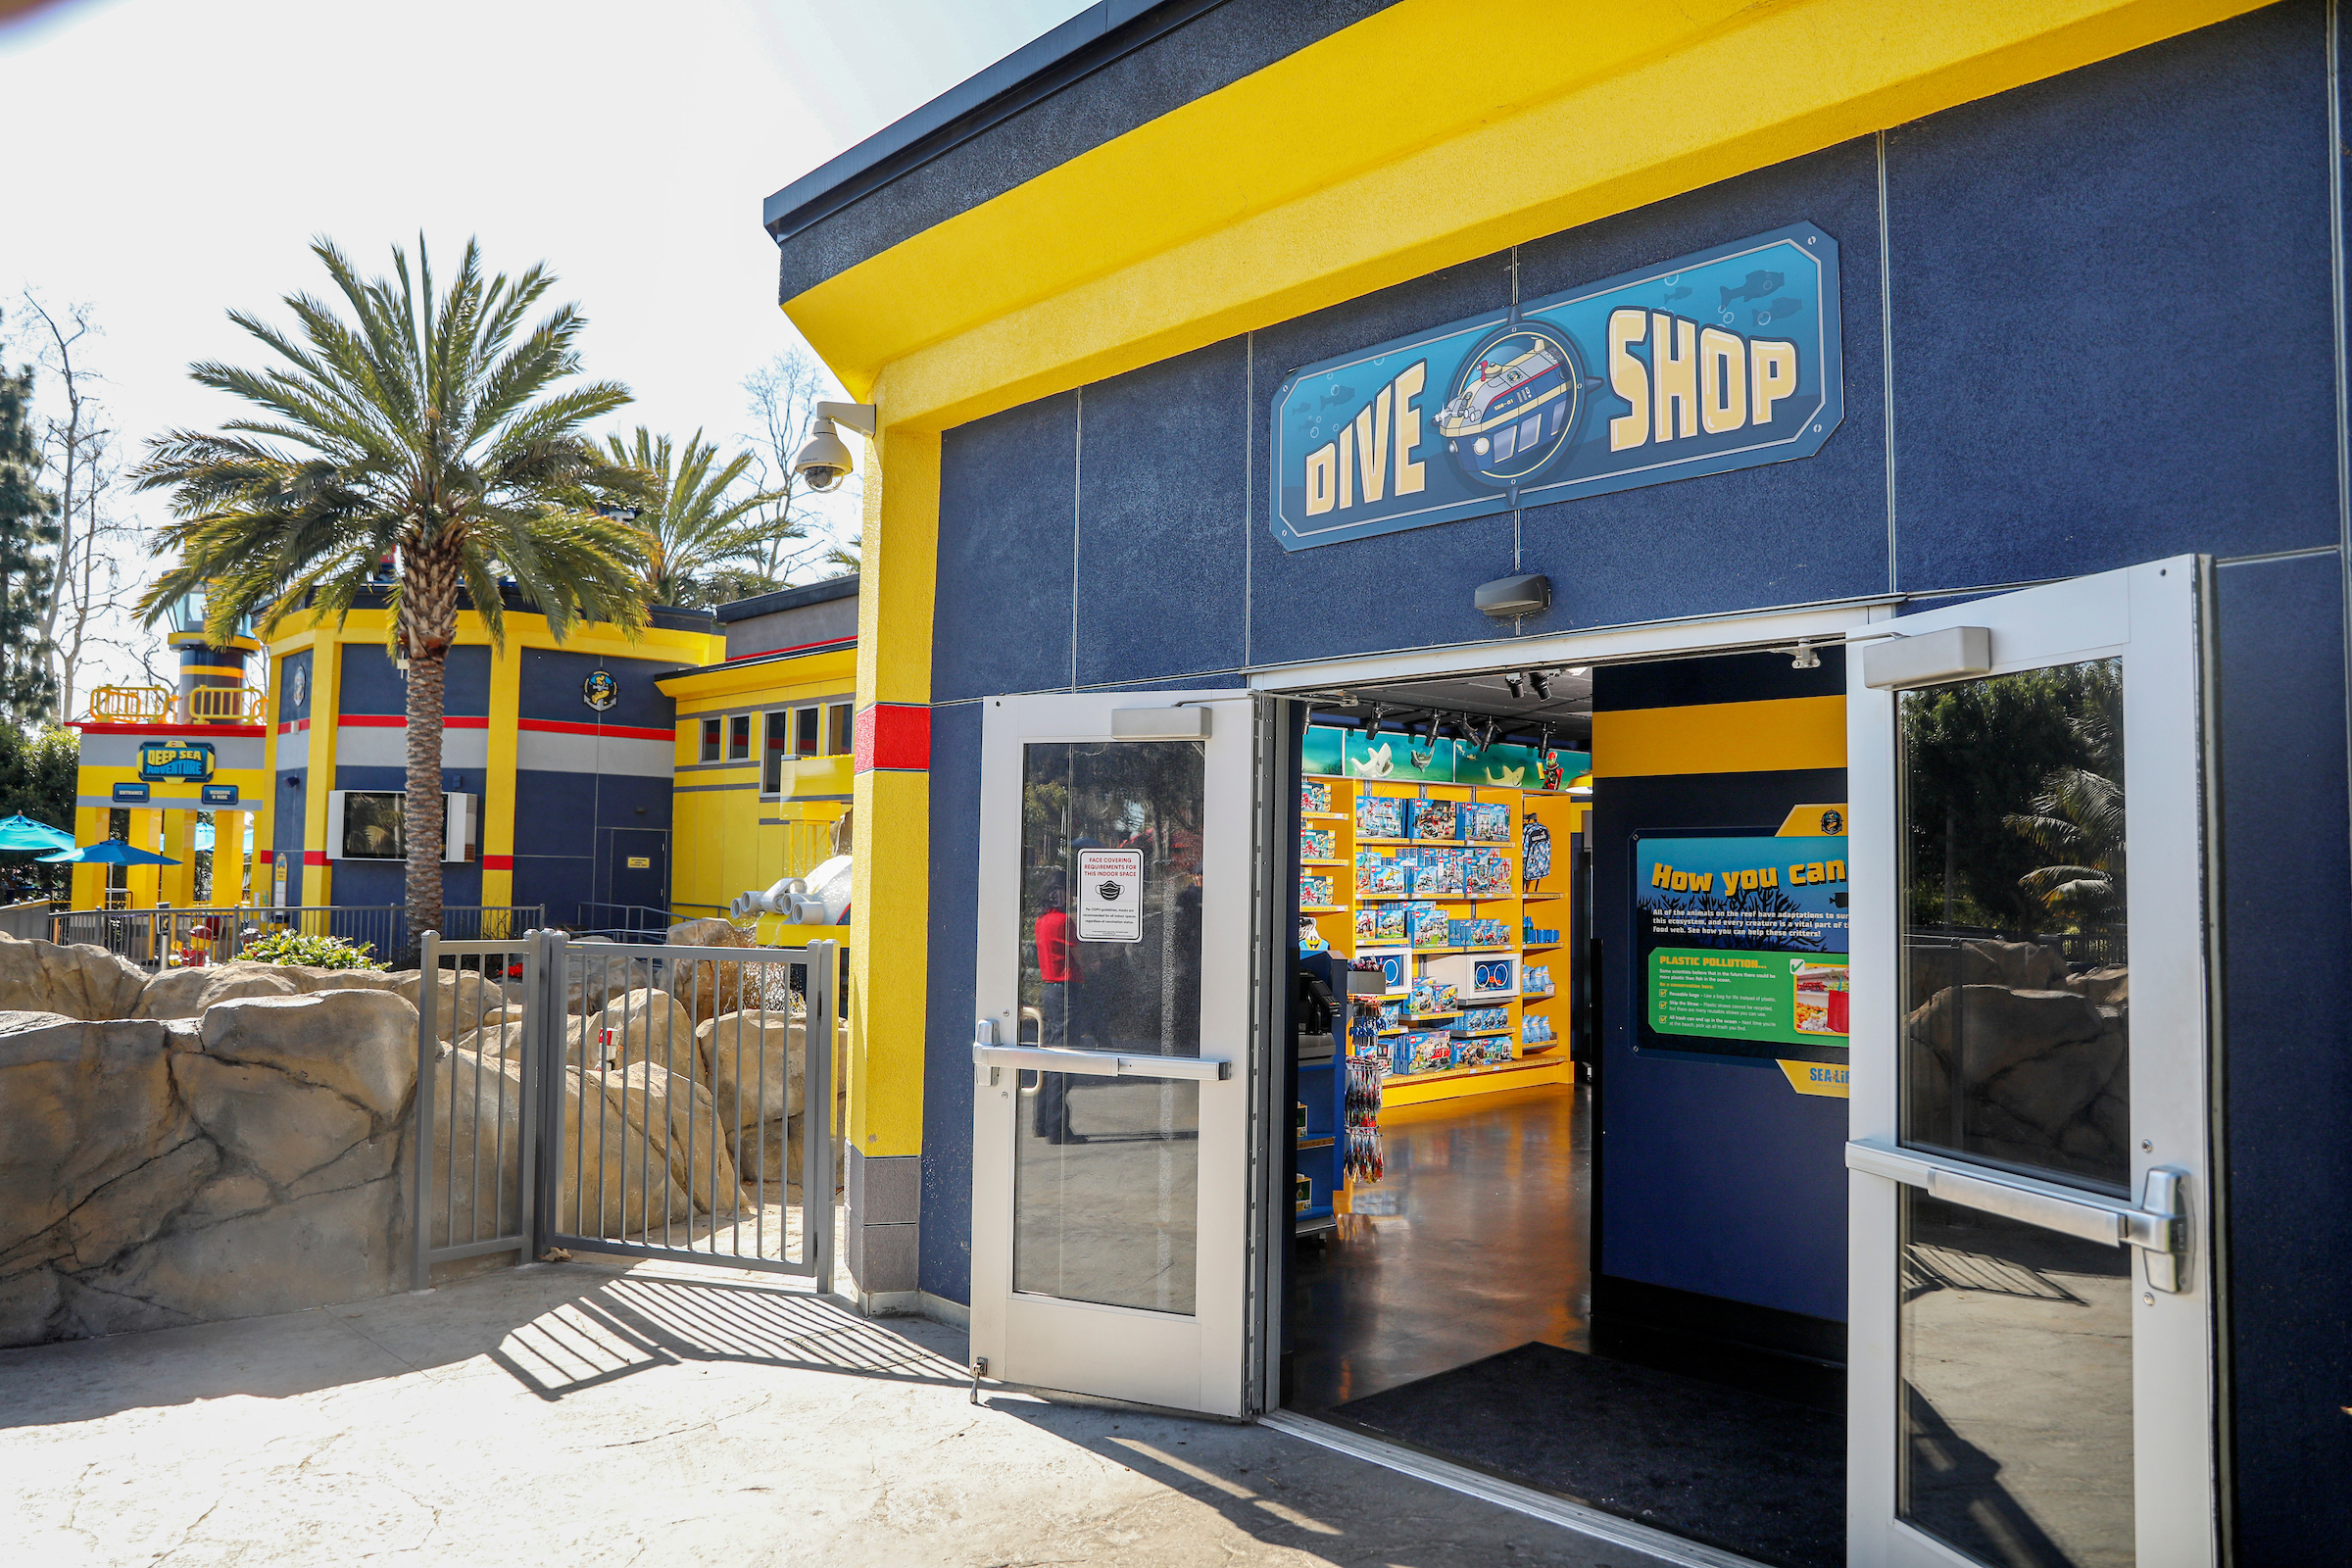 Entrance to the Dive Shop at LEGOLAND California